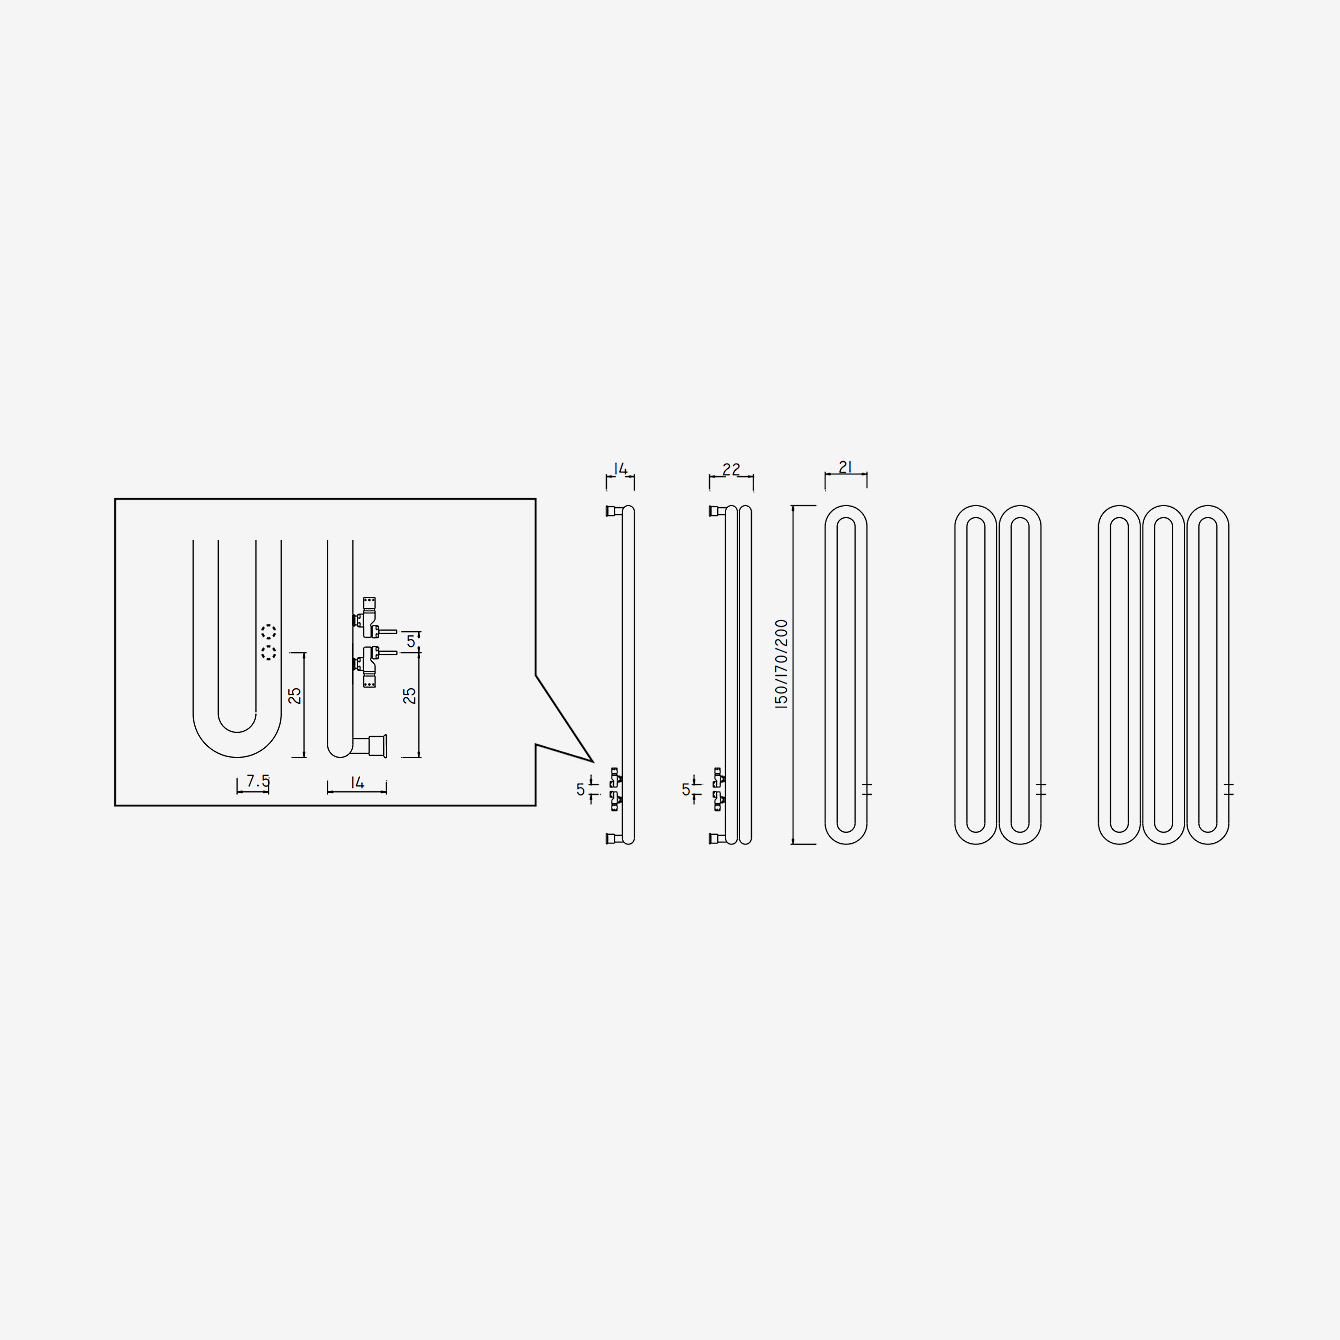 Tubone Single (V) - Vertikale ANTRAX IT Designheizung von Andrea Crosetta | Radiamo